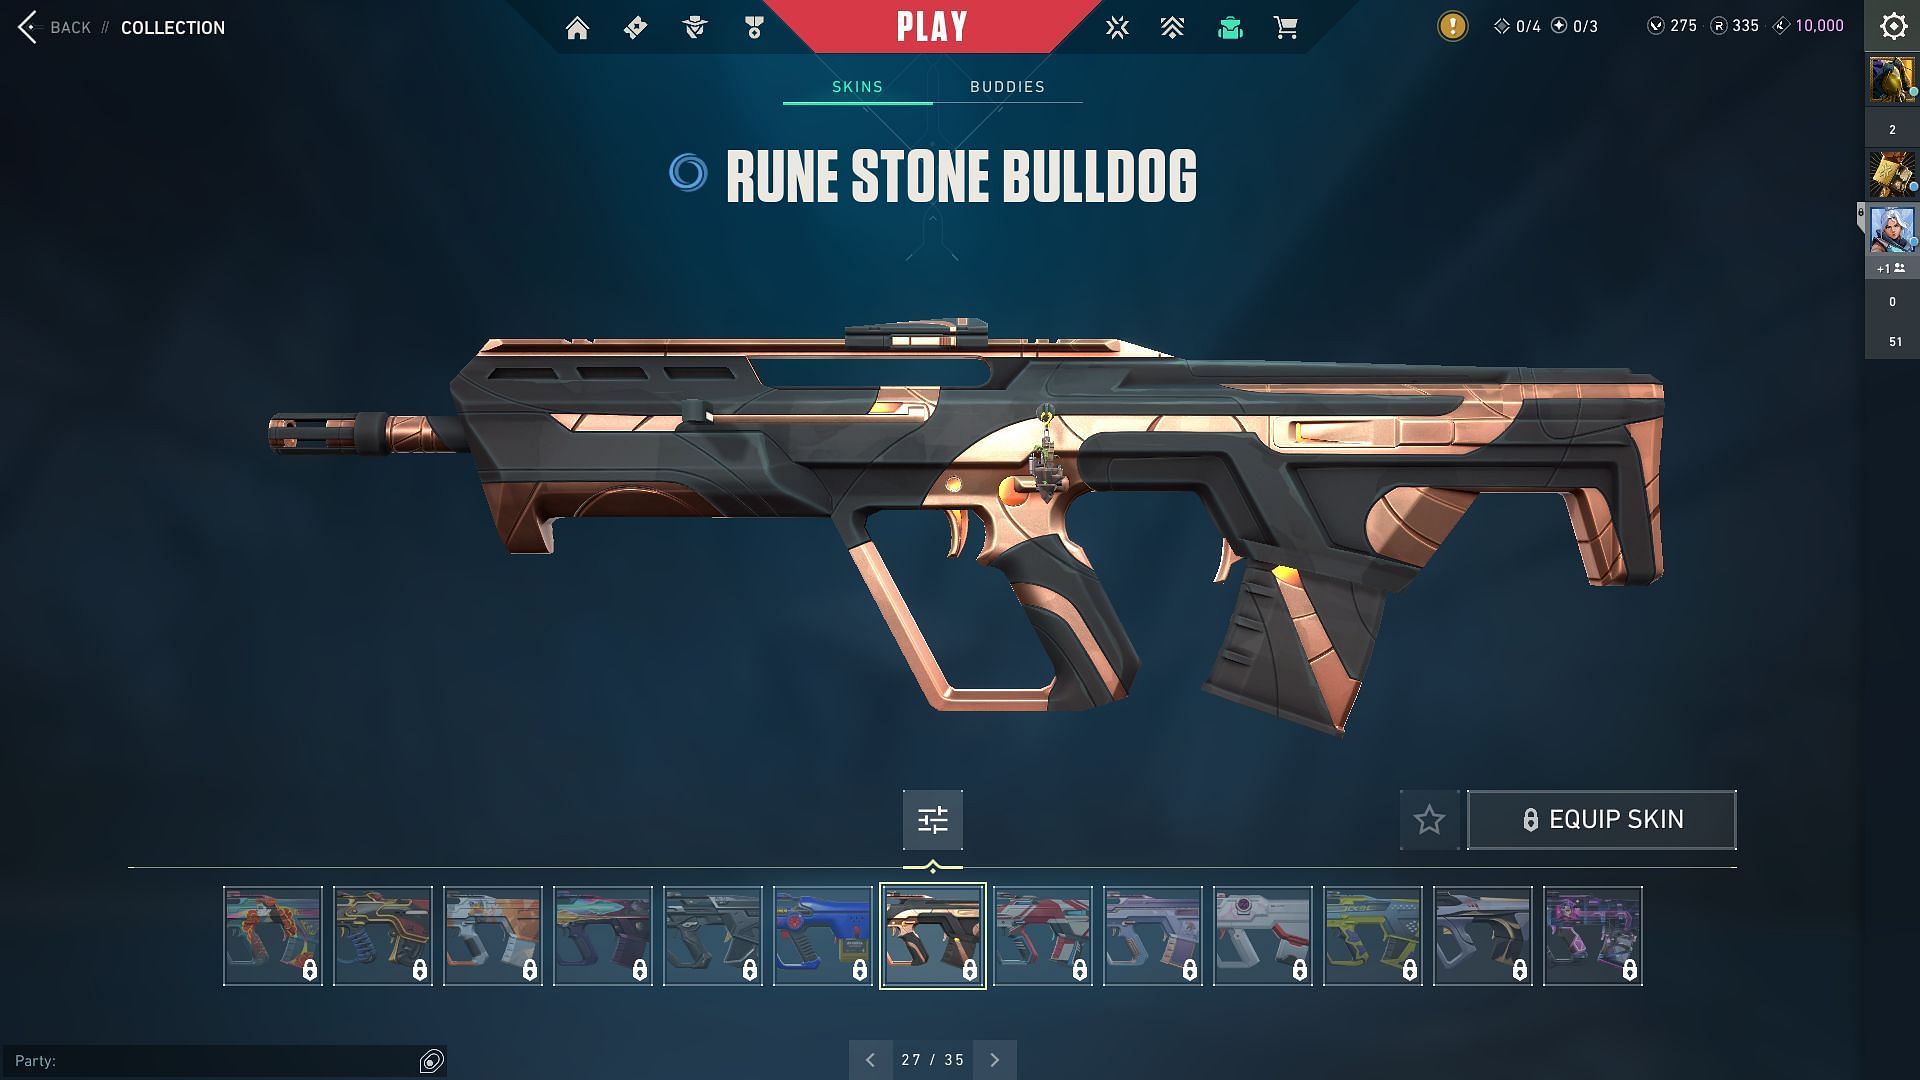 Rune Stone Bulldog (Image via Sportskeeda and Riot Games)